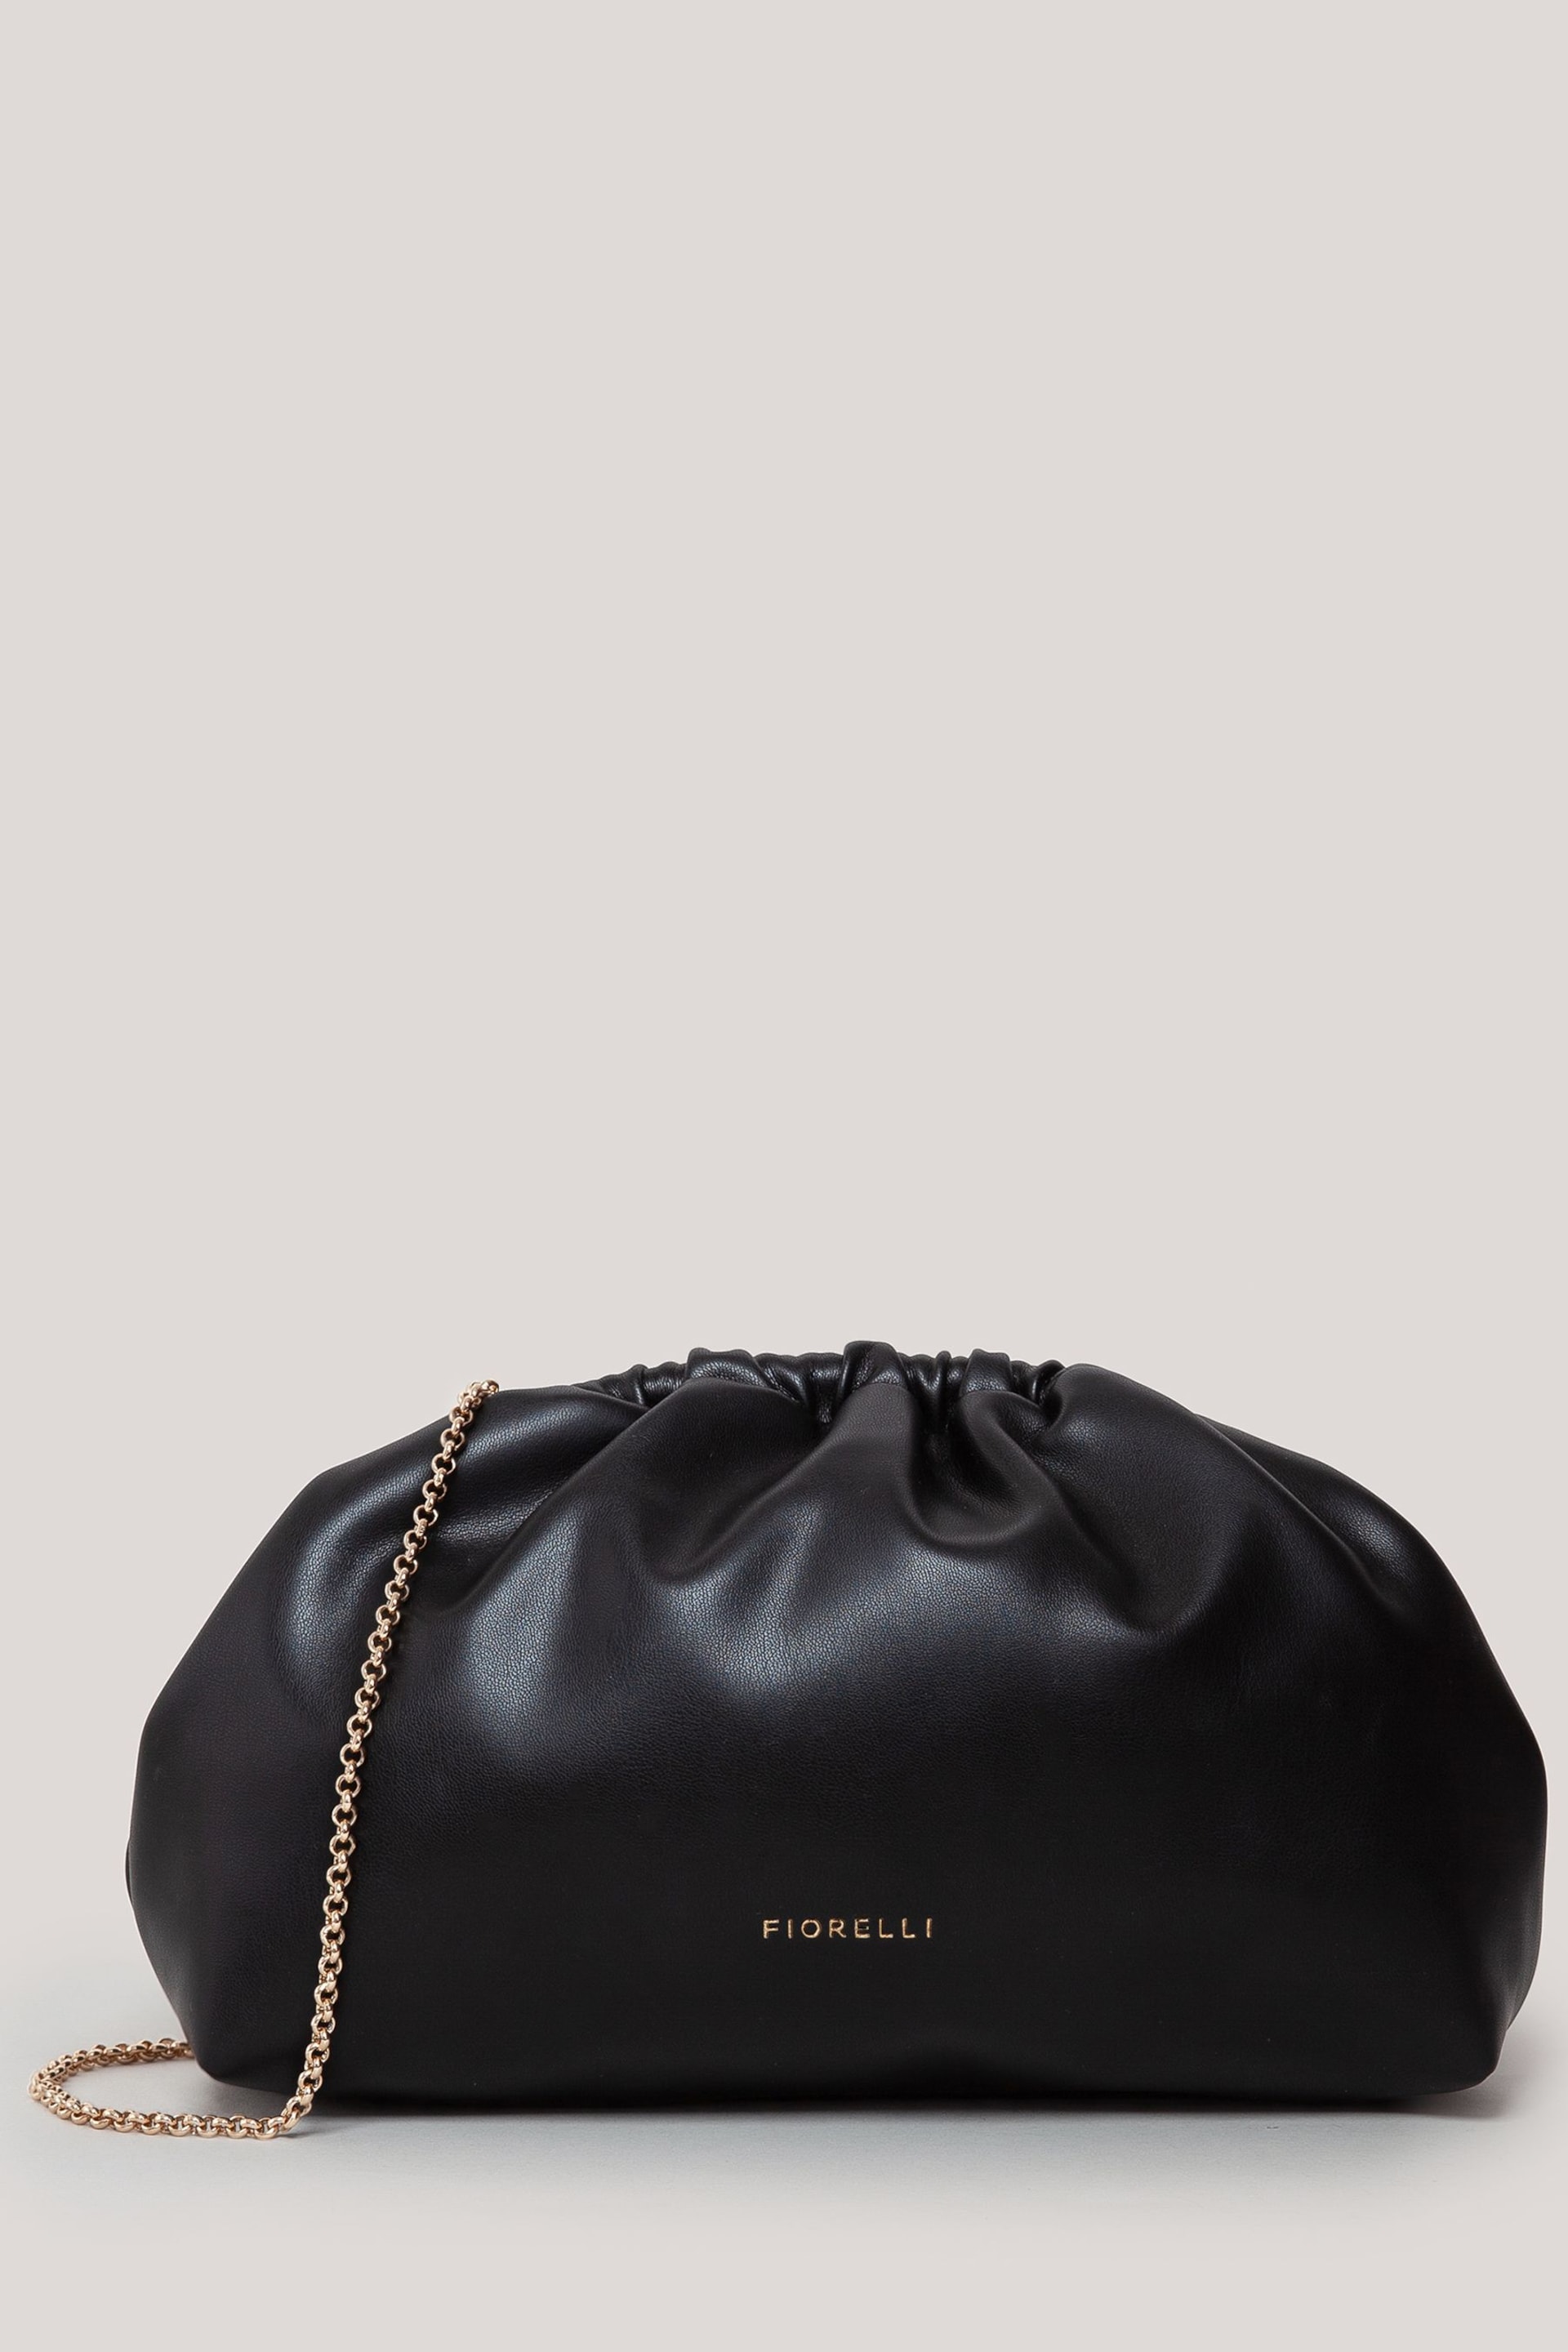 Fiorelli Edith Black Cross-Body Bag - Image 7 of 7